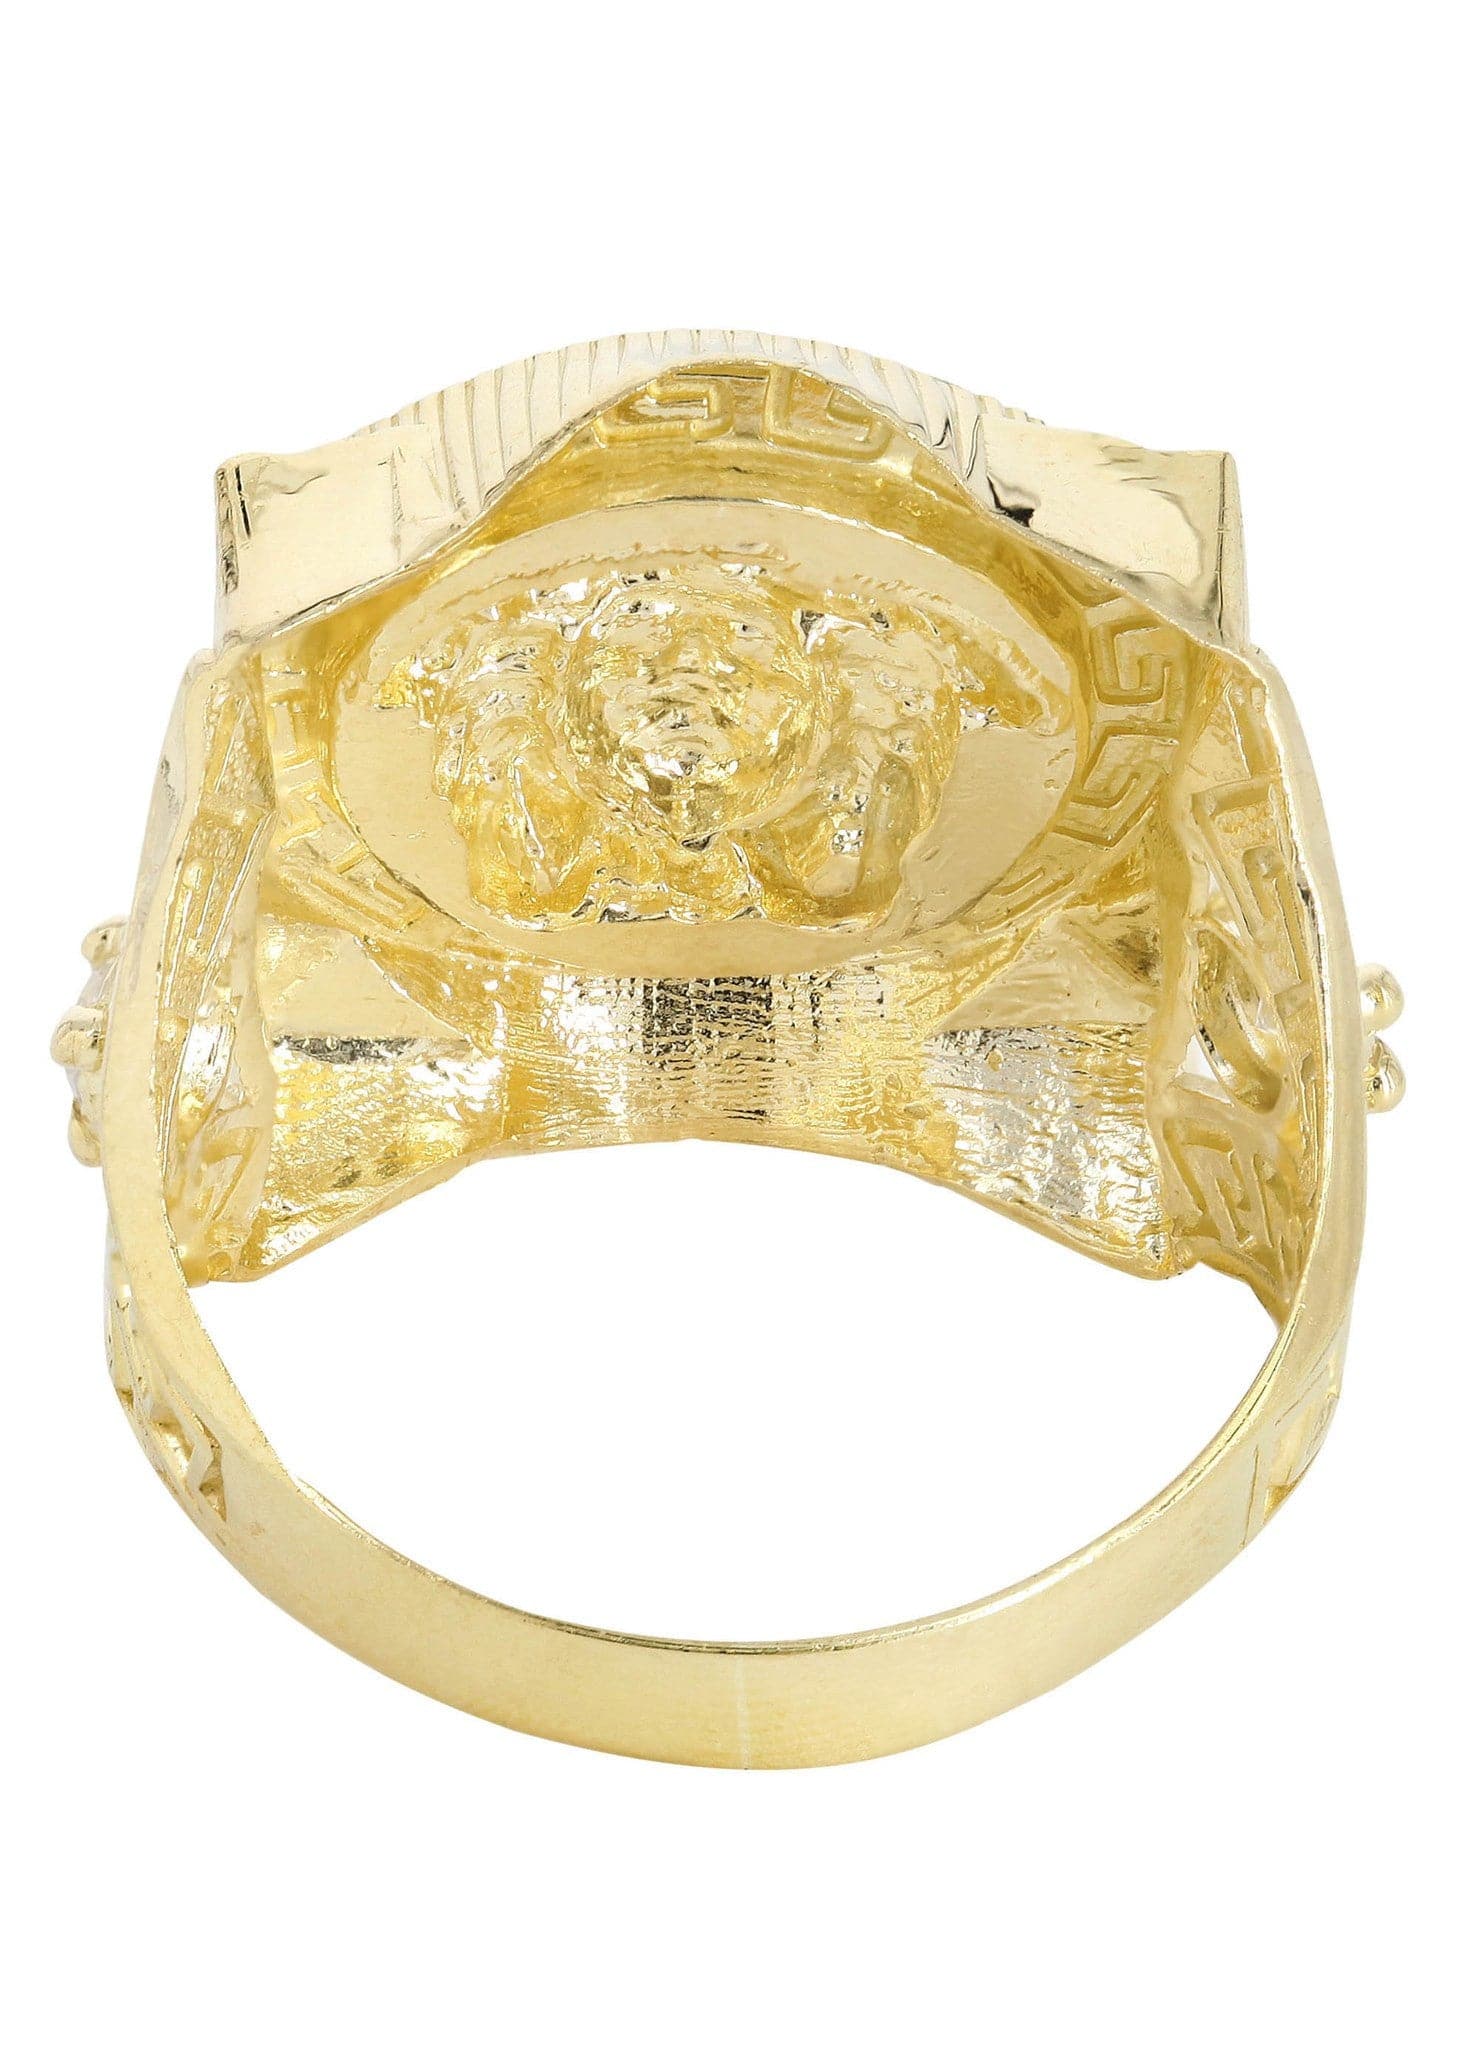 10k gold versace ring